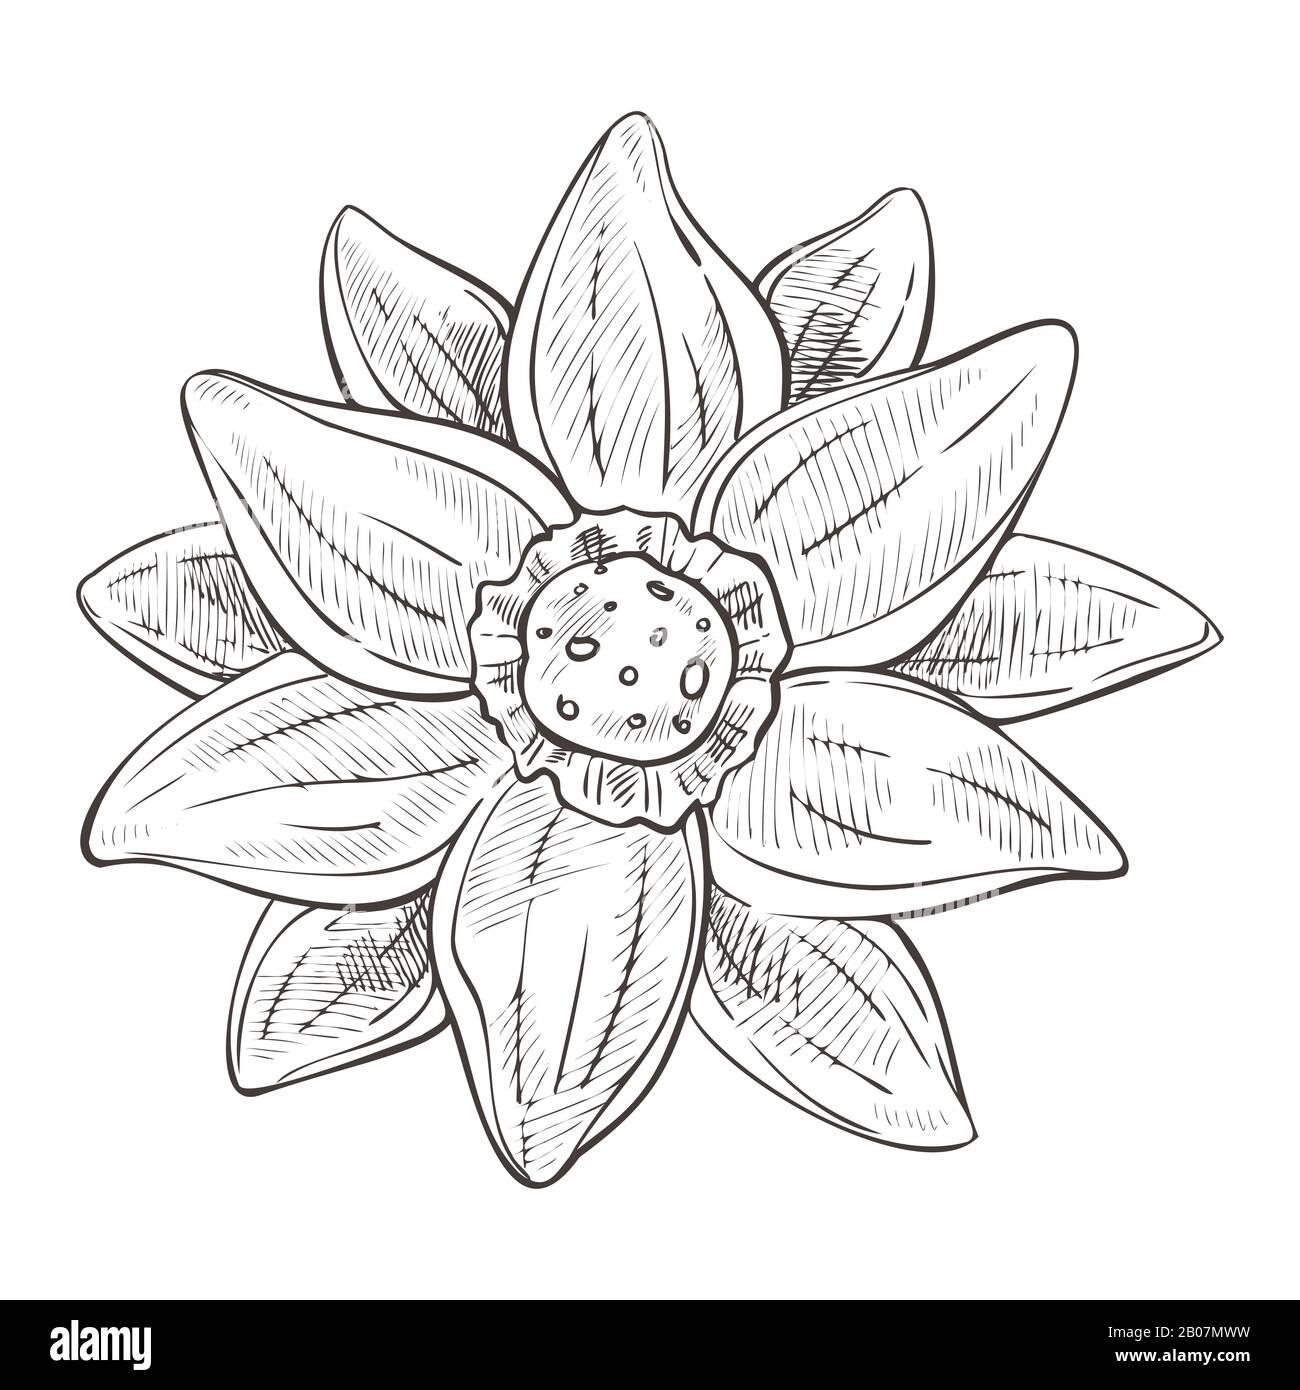 Lotus flower aquatic plant hand drawn sketch illustration Stock Vector